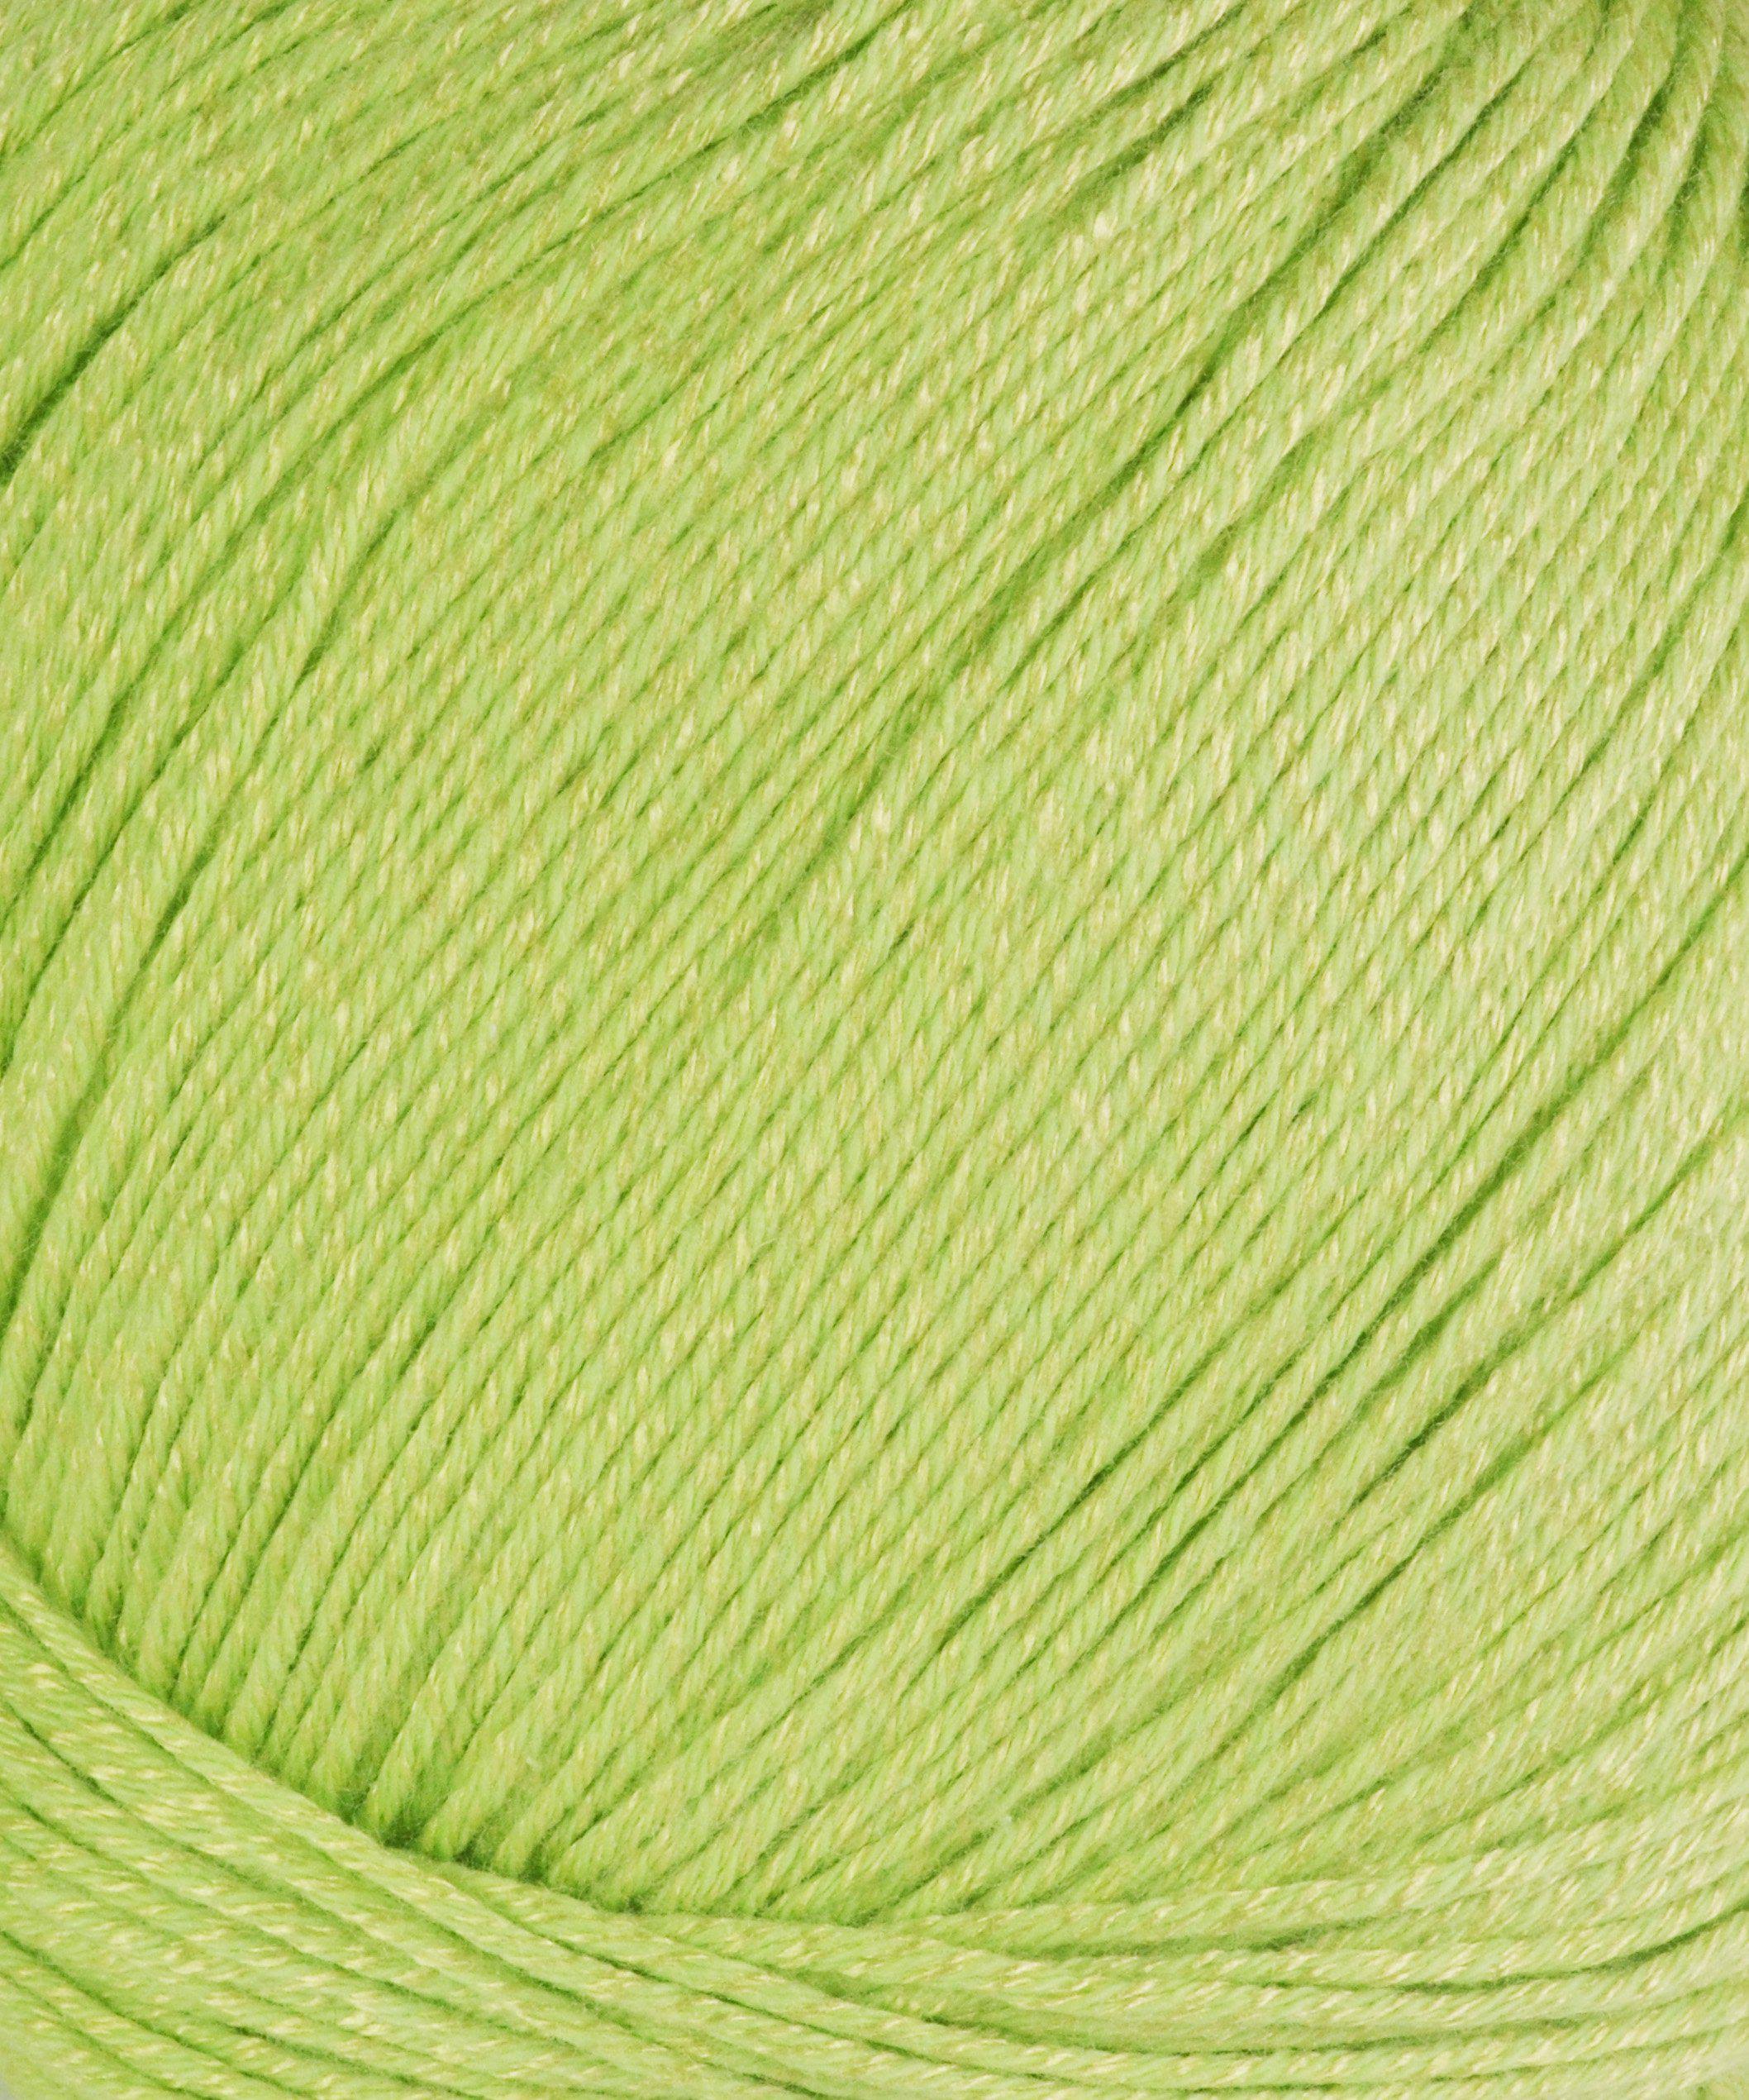 Universal Yarn Bamboo Pop - Lime Green (108)